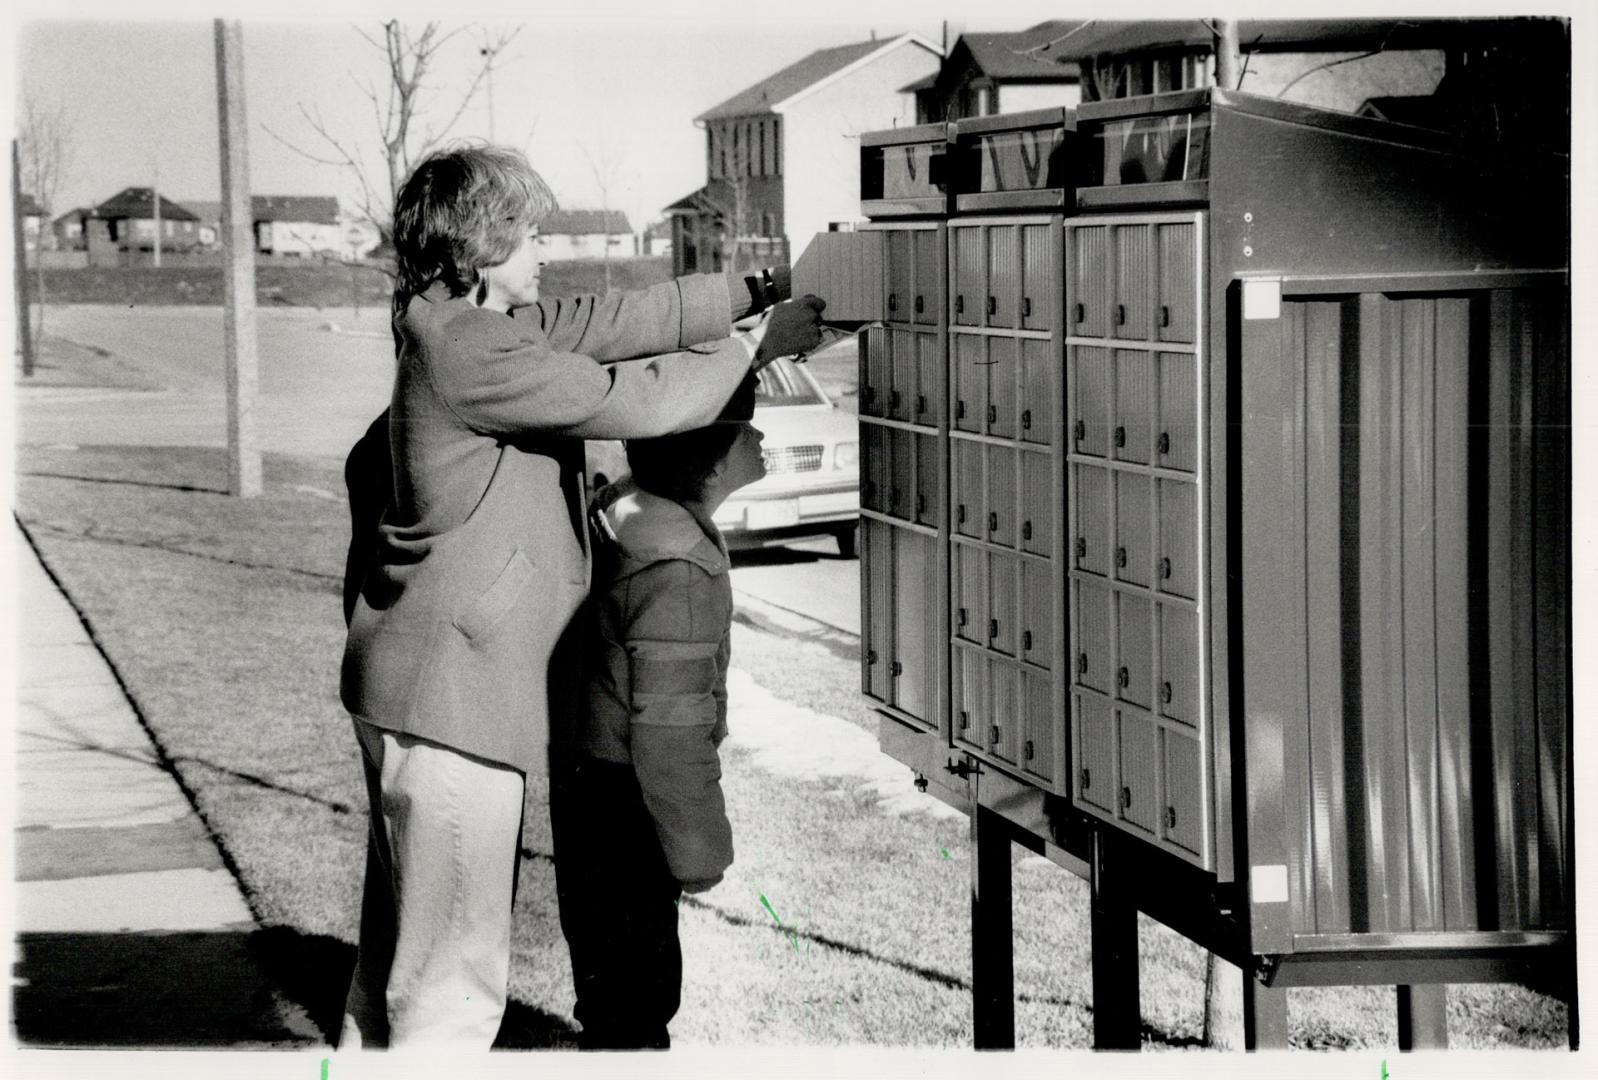 Mailbox uproar